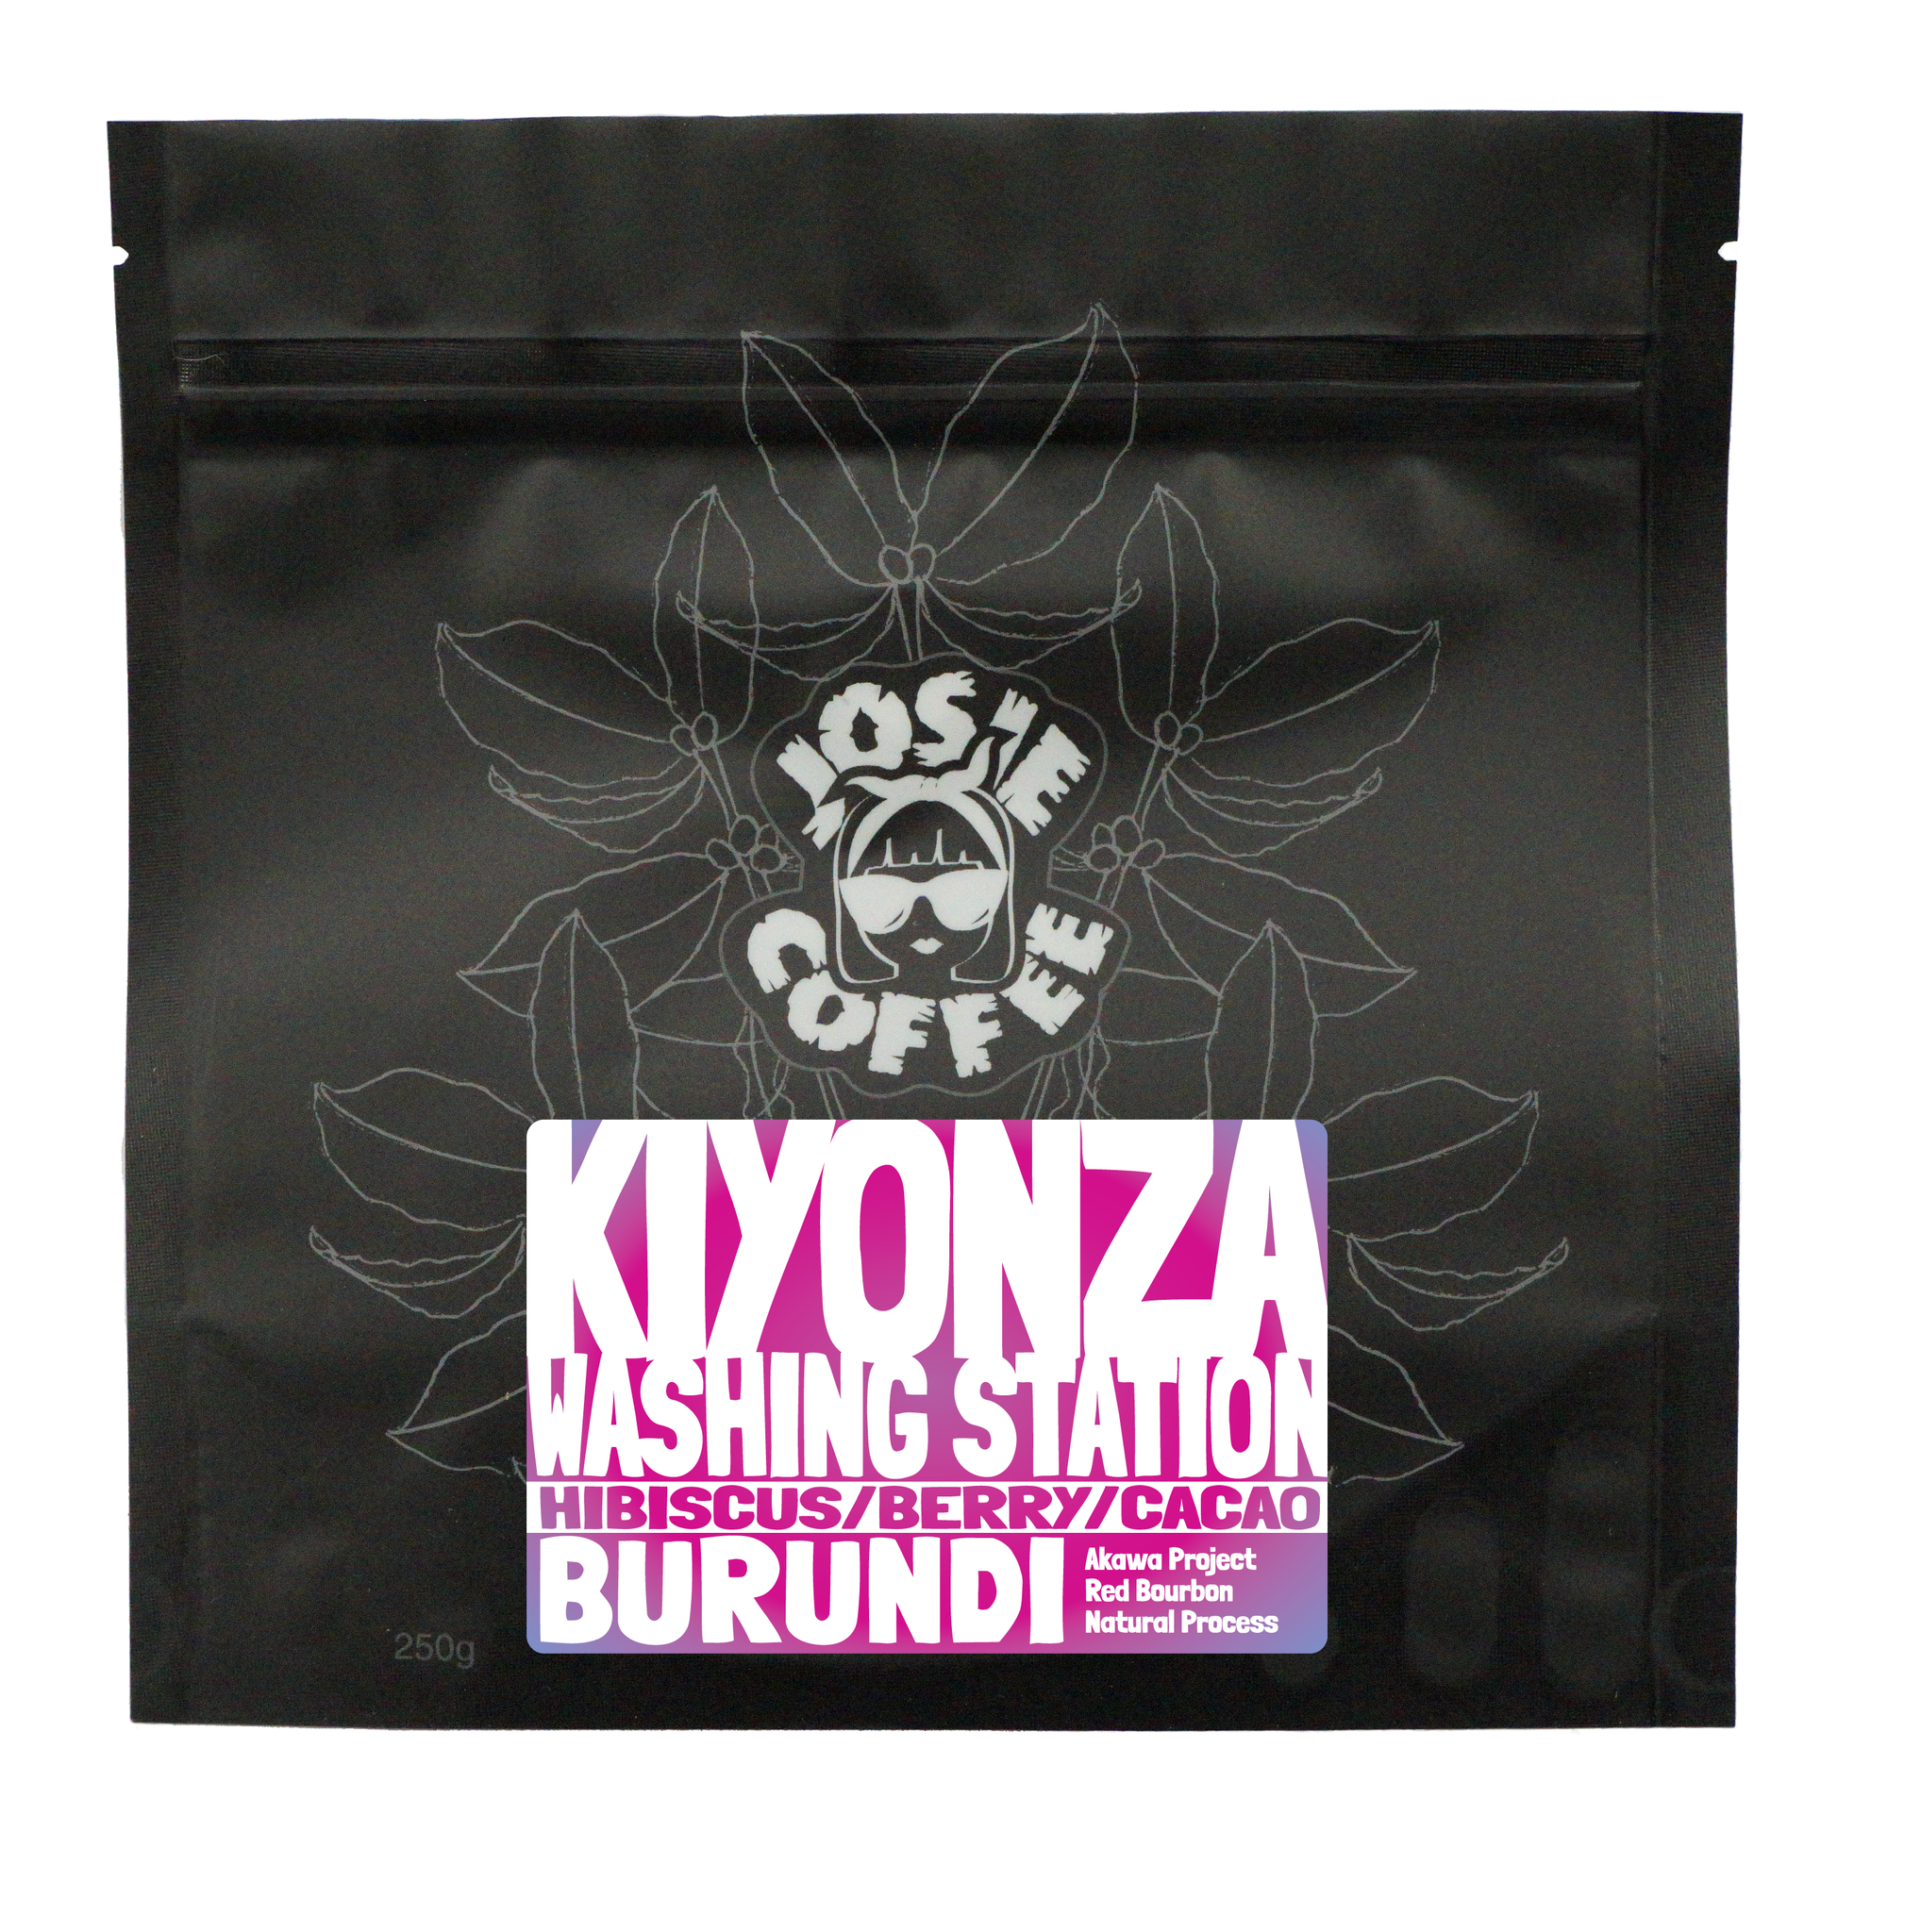 Burundi - Kiyonza - Natural Process